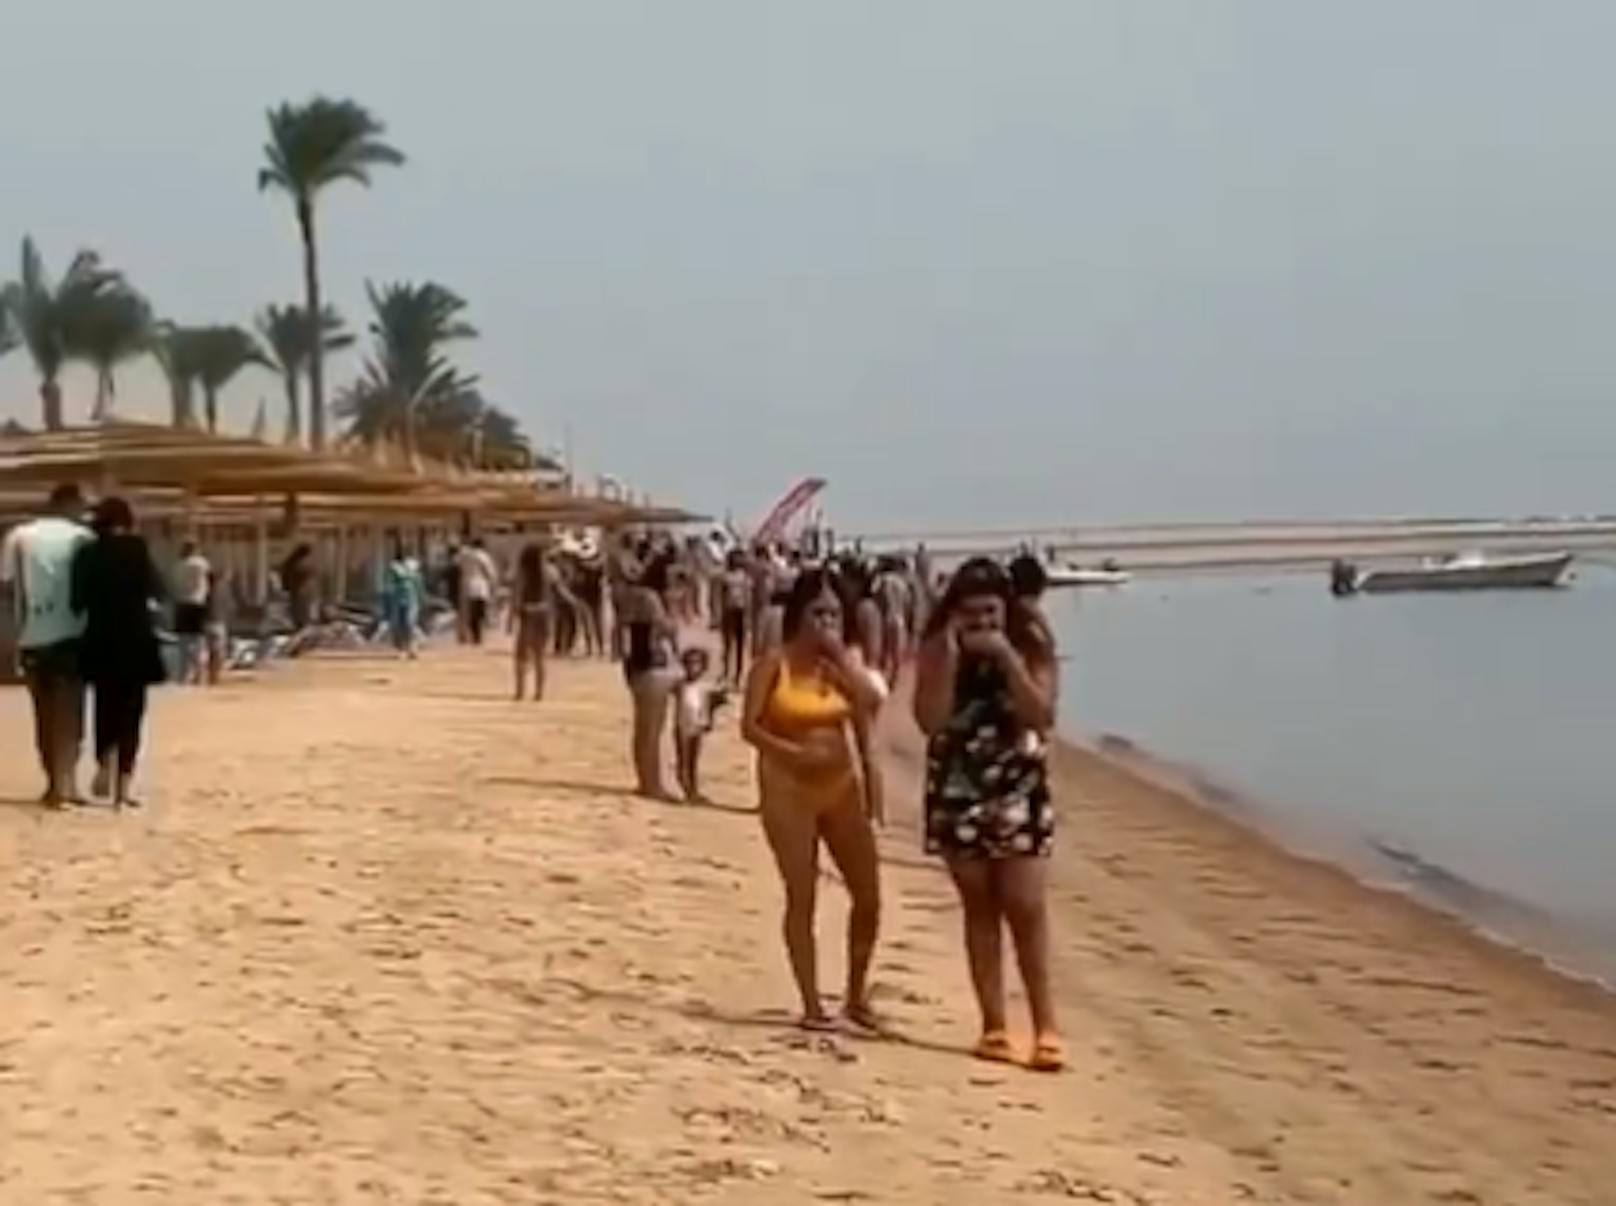 Hai-Attacke an Hotel-Strand – Touristin verliert Arm